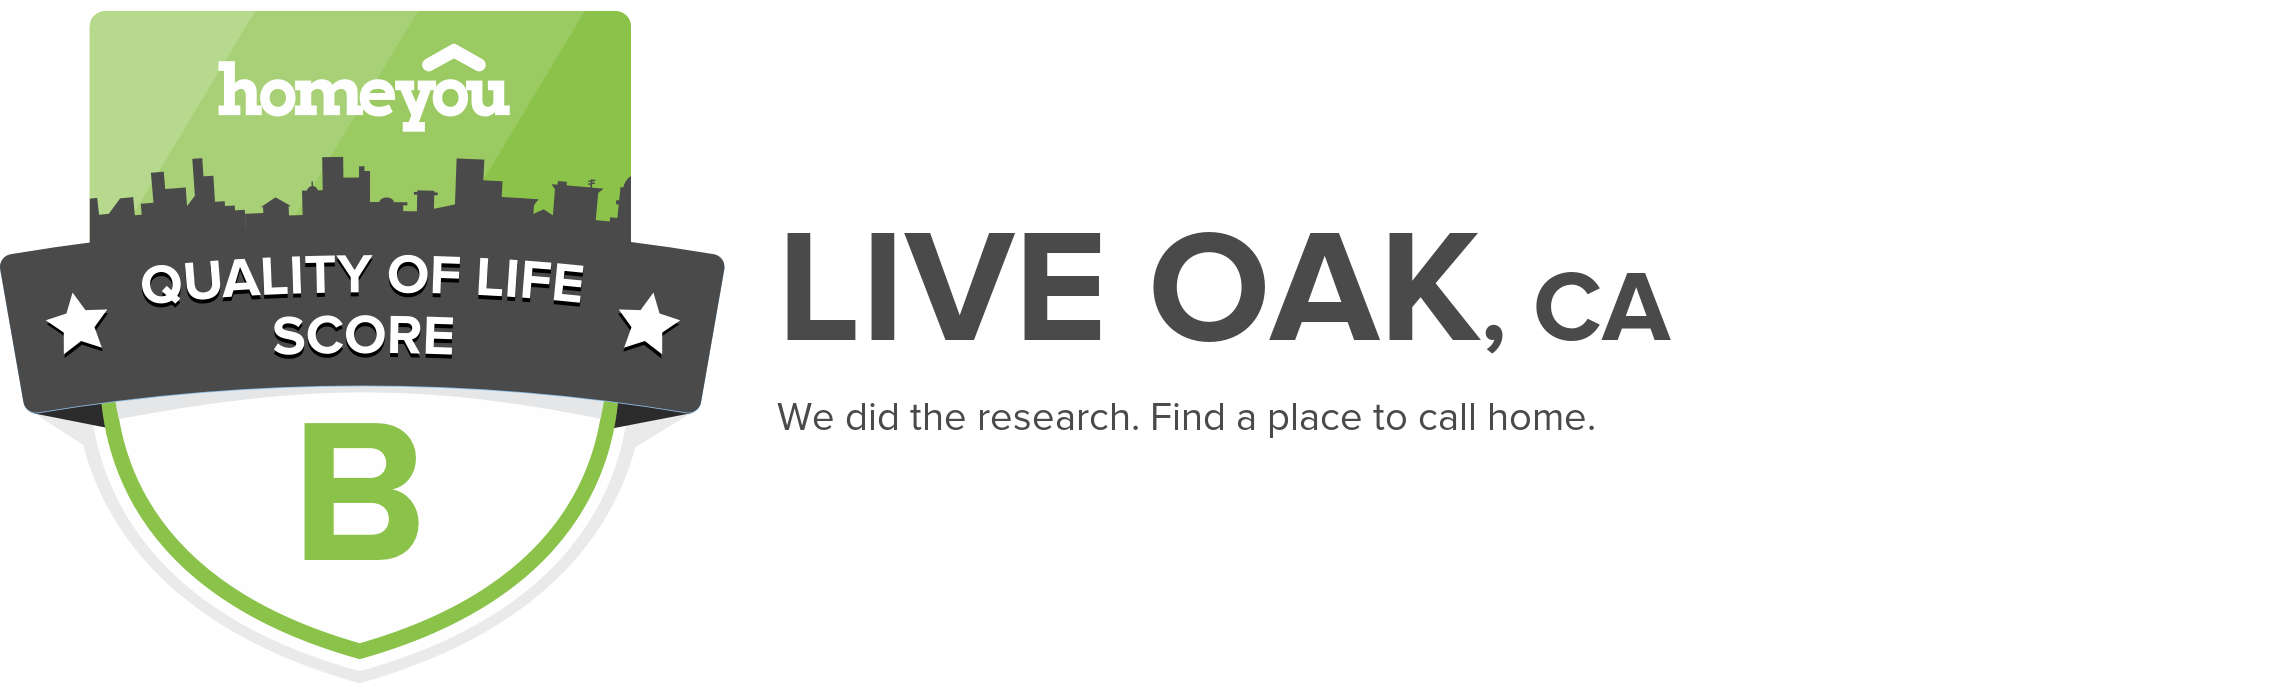 Live Oak, CA